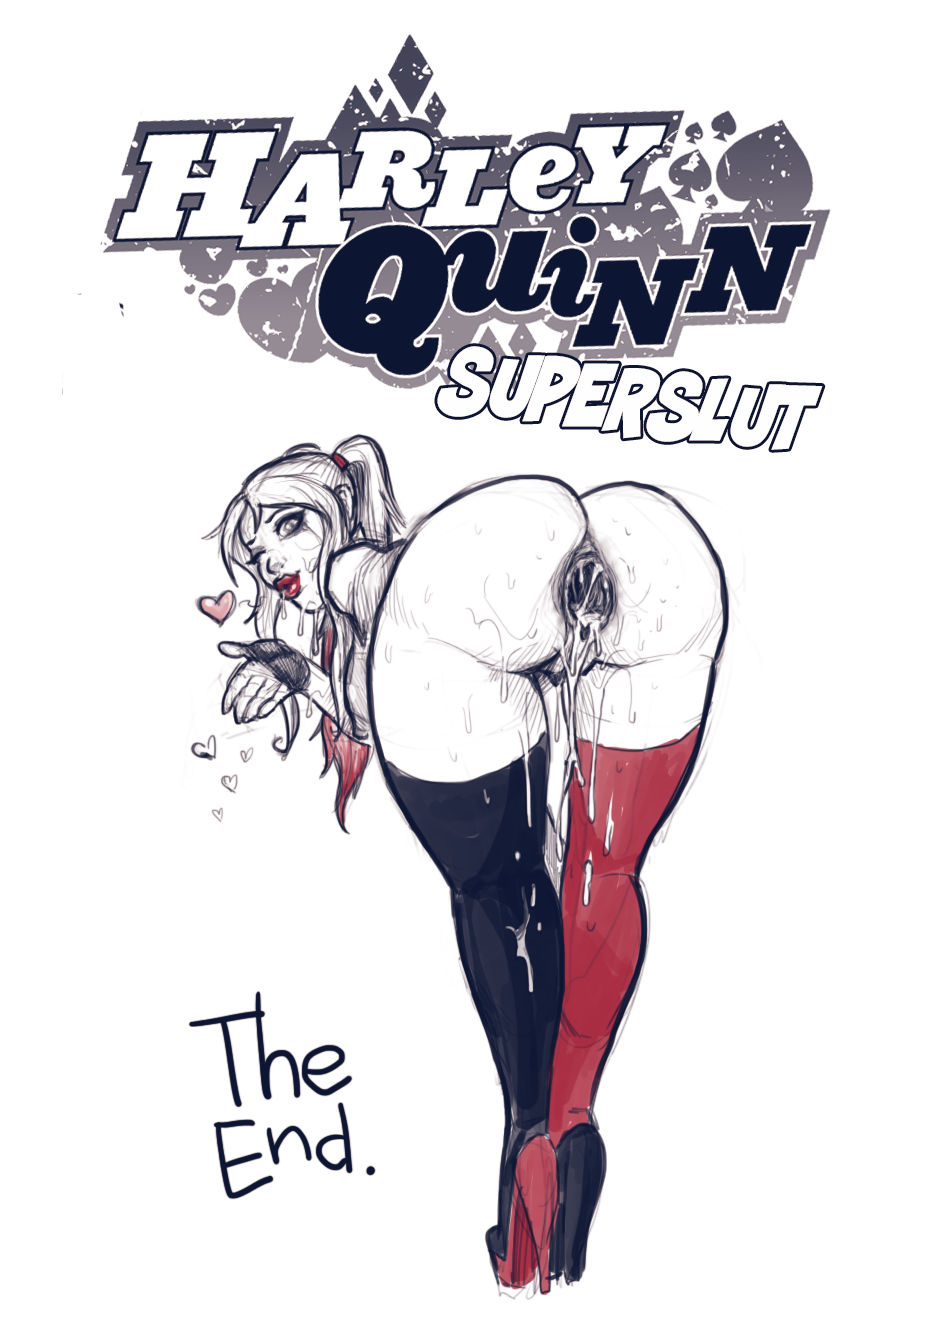 Harley quinn superslut porn comic picture 97